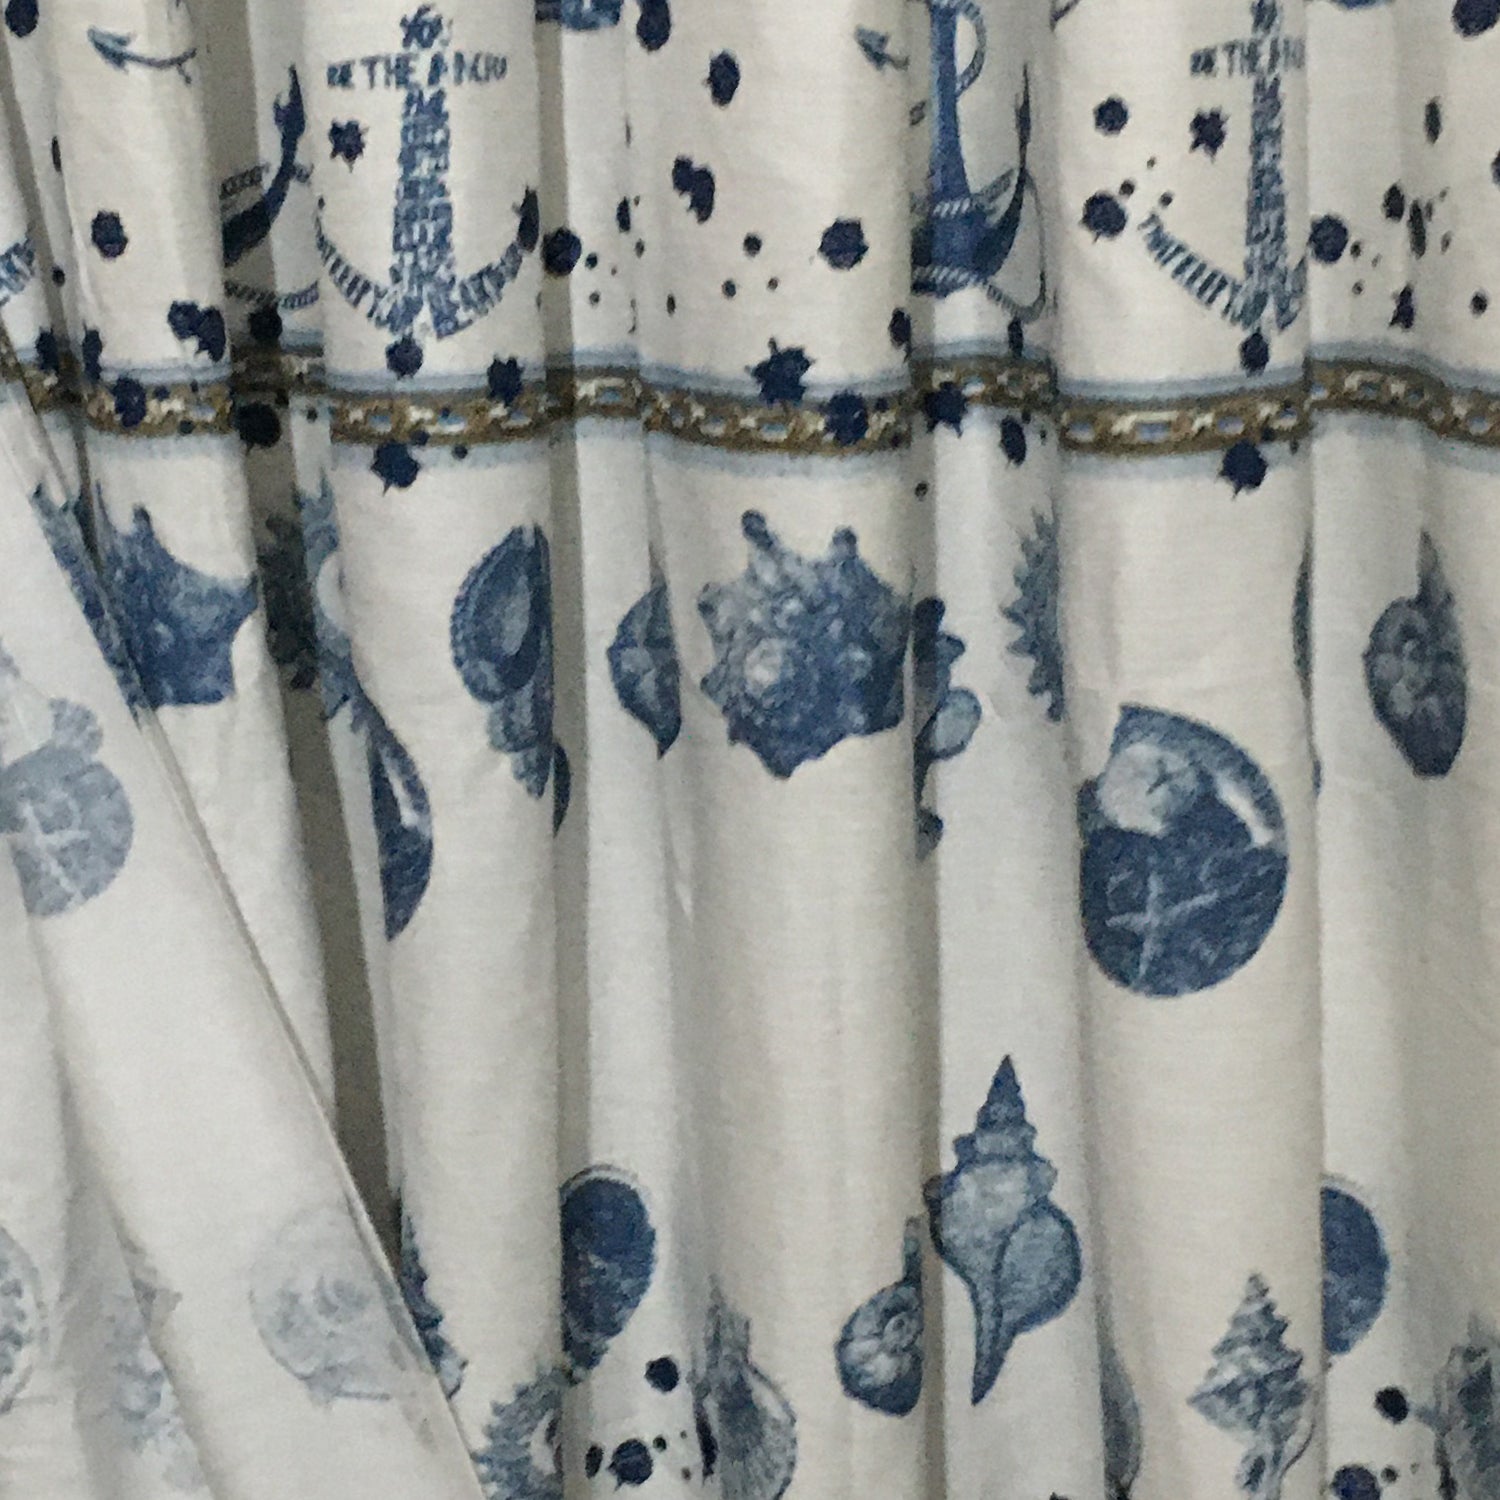 Dainty Home 100% Cotton Marine Fabric Shower Curtain, 70'' W x 72'' L